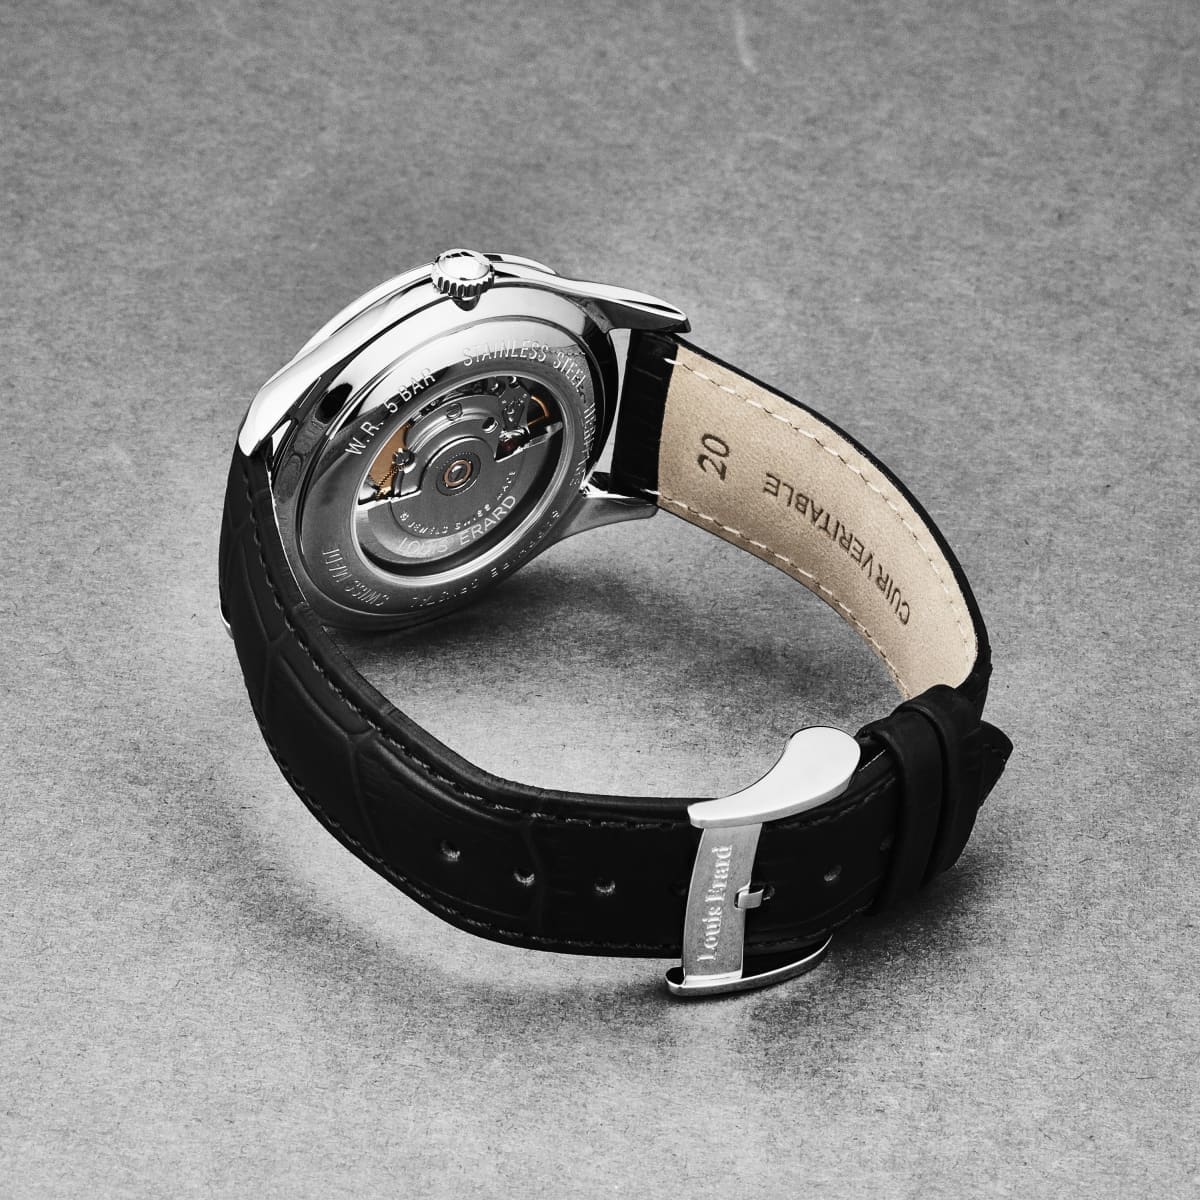 Louis Erard Men’s ’Heritage’ Blue/Black Dial Black Leather Strap Automatic Watch 69287AA65.BAAC82 - On sale